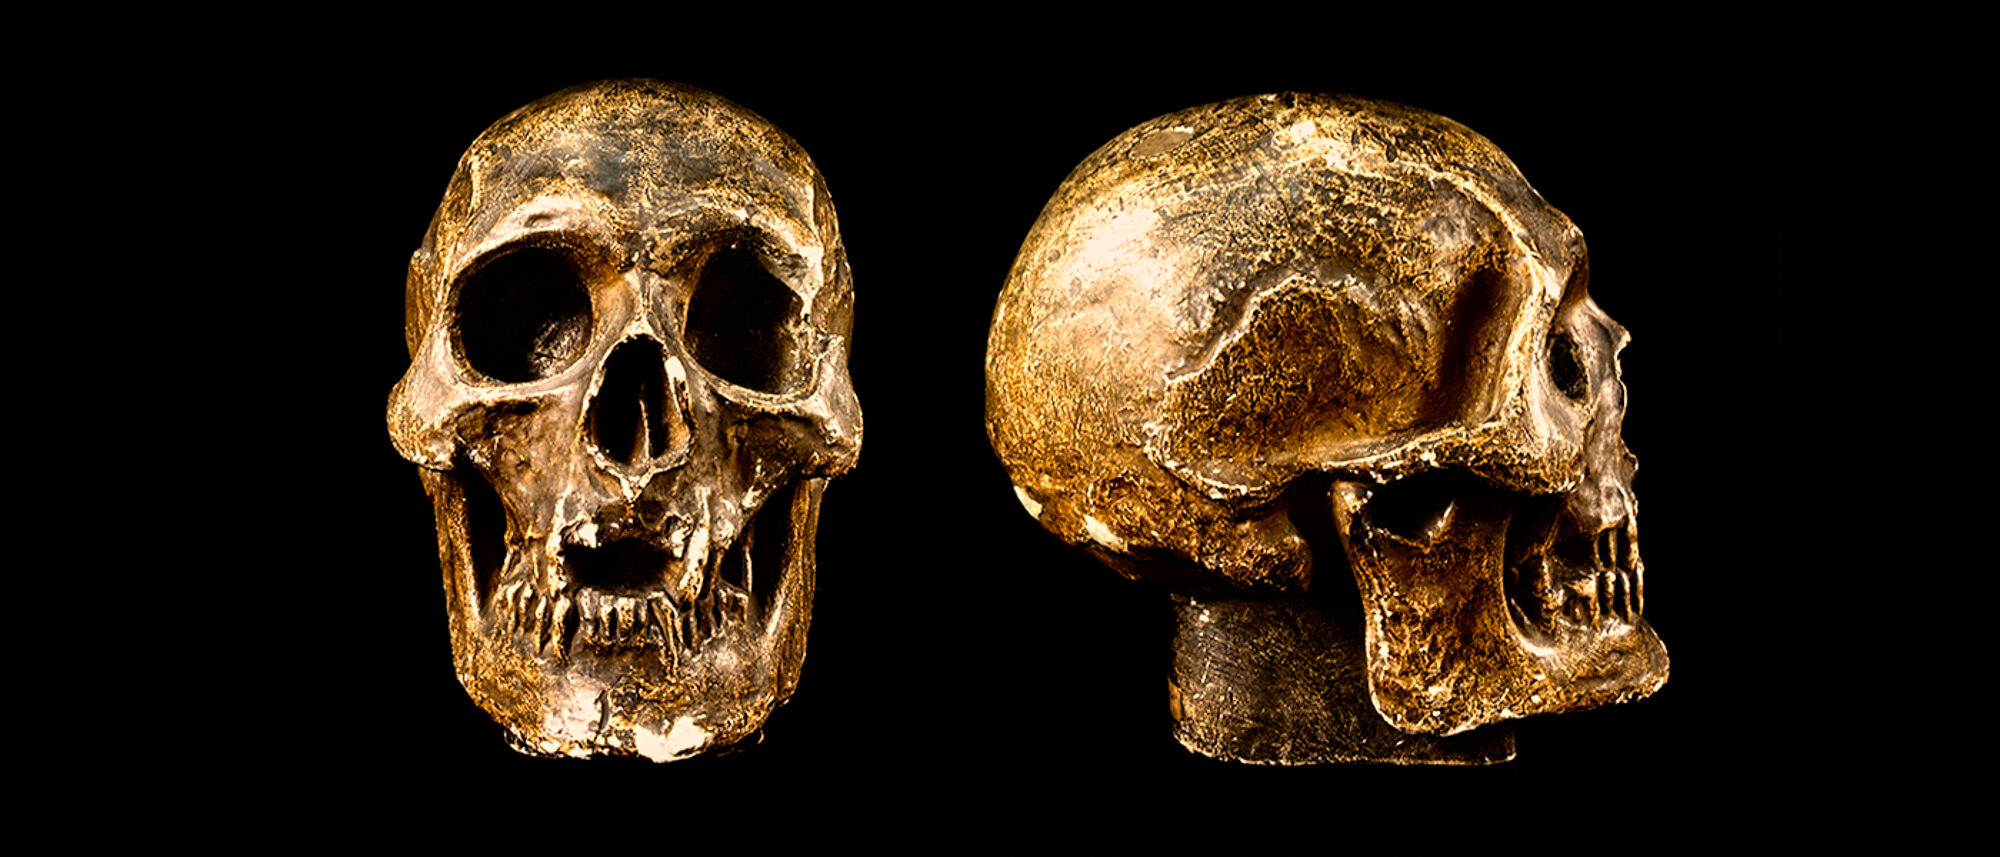 Cast of the skull of Robert the Bruce